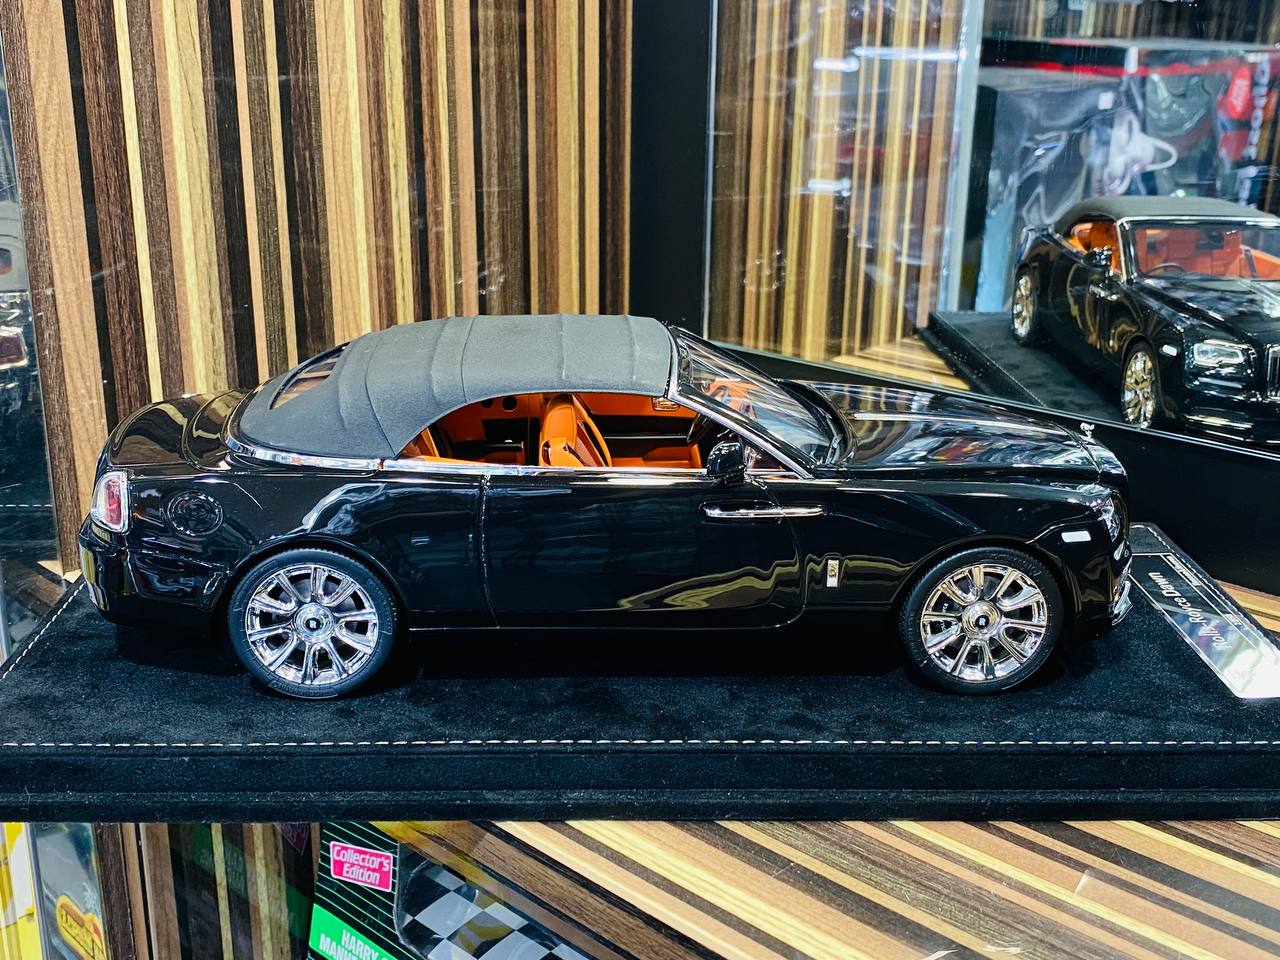 1/18 HH Rolls Royce Dawn Resin Model - Diamond Black | Limited Edition